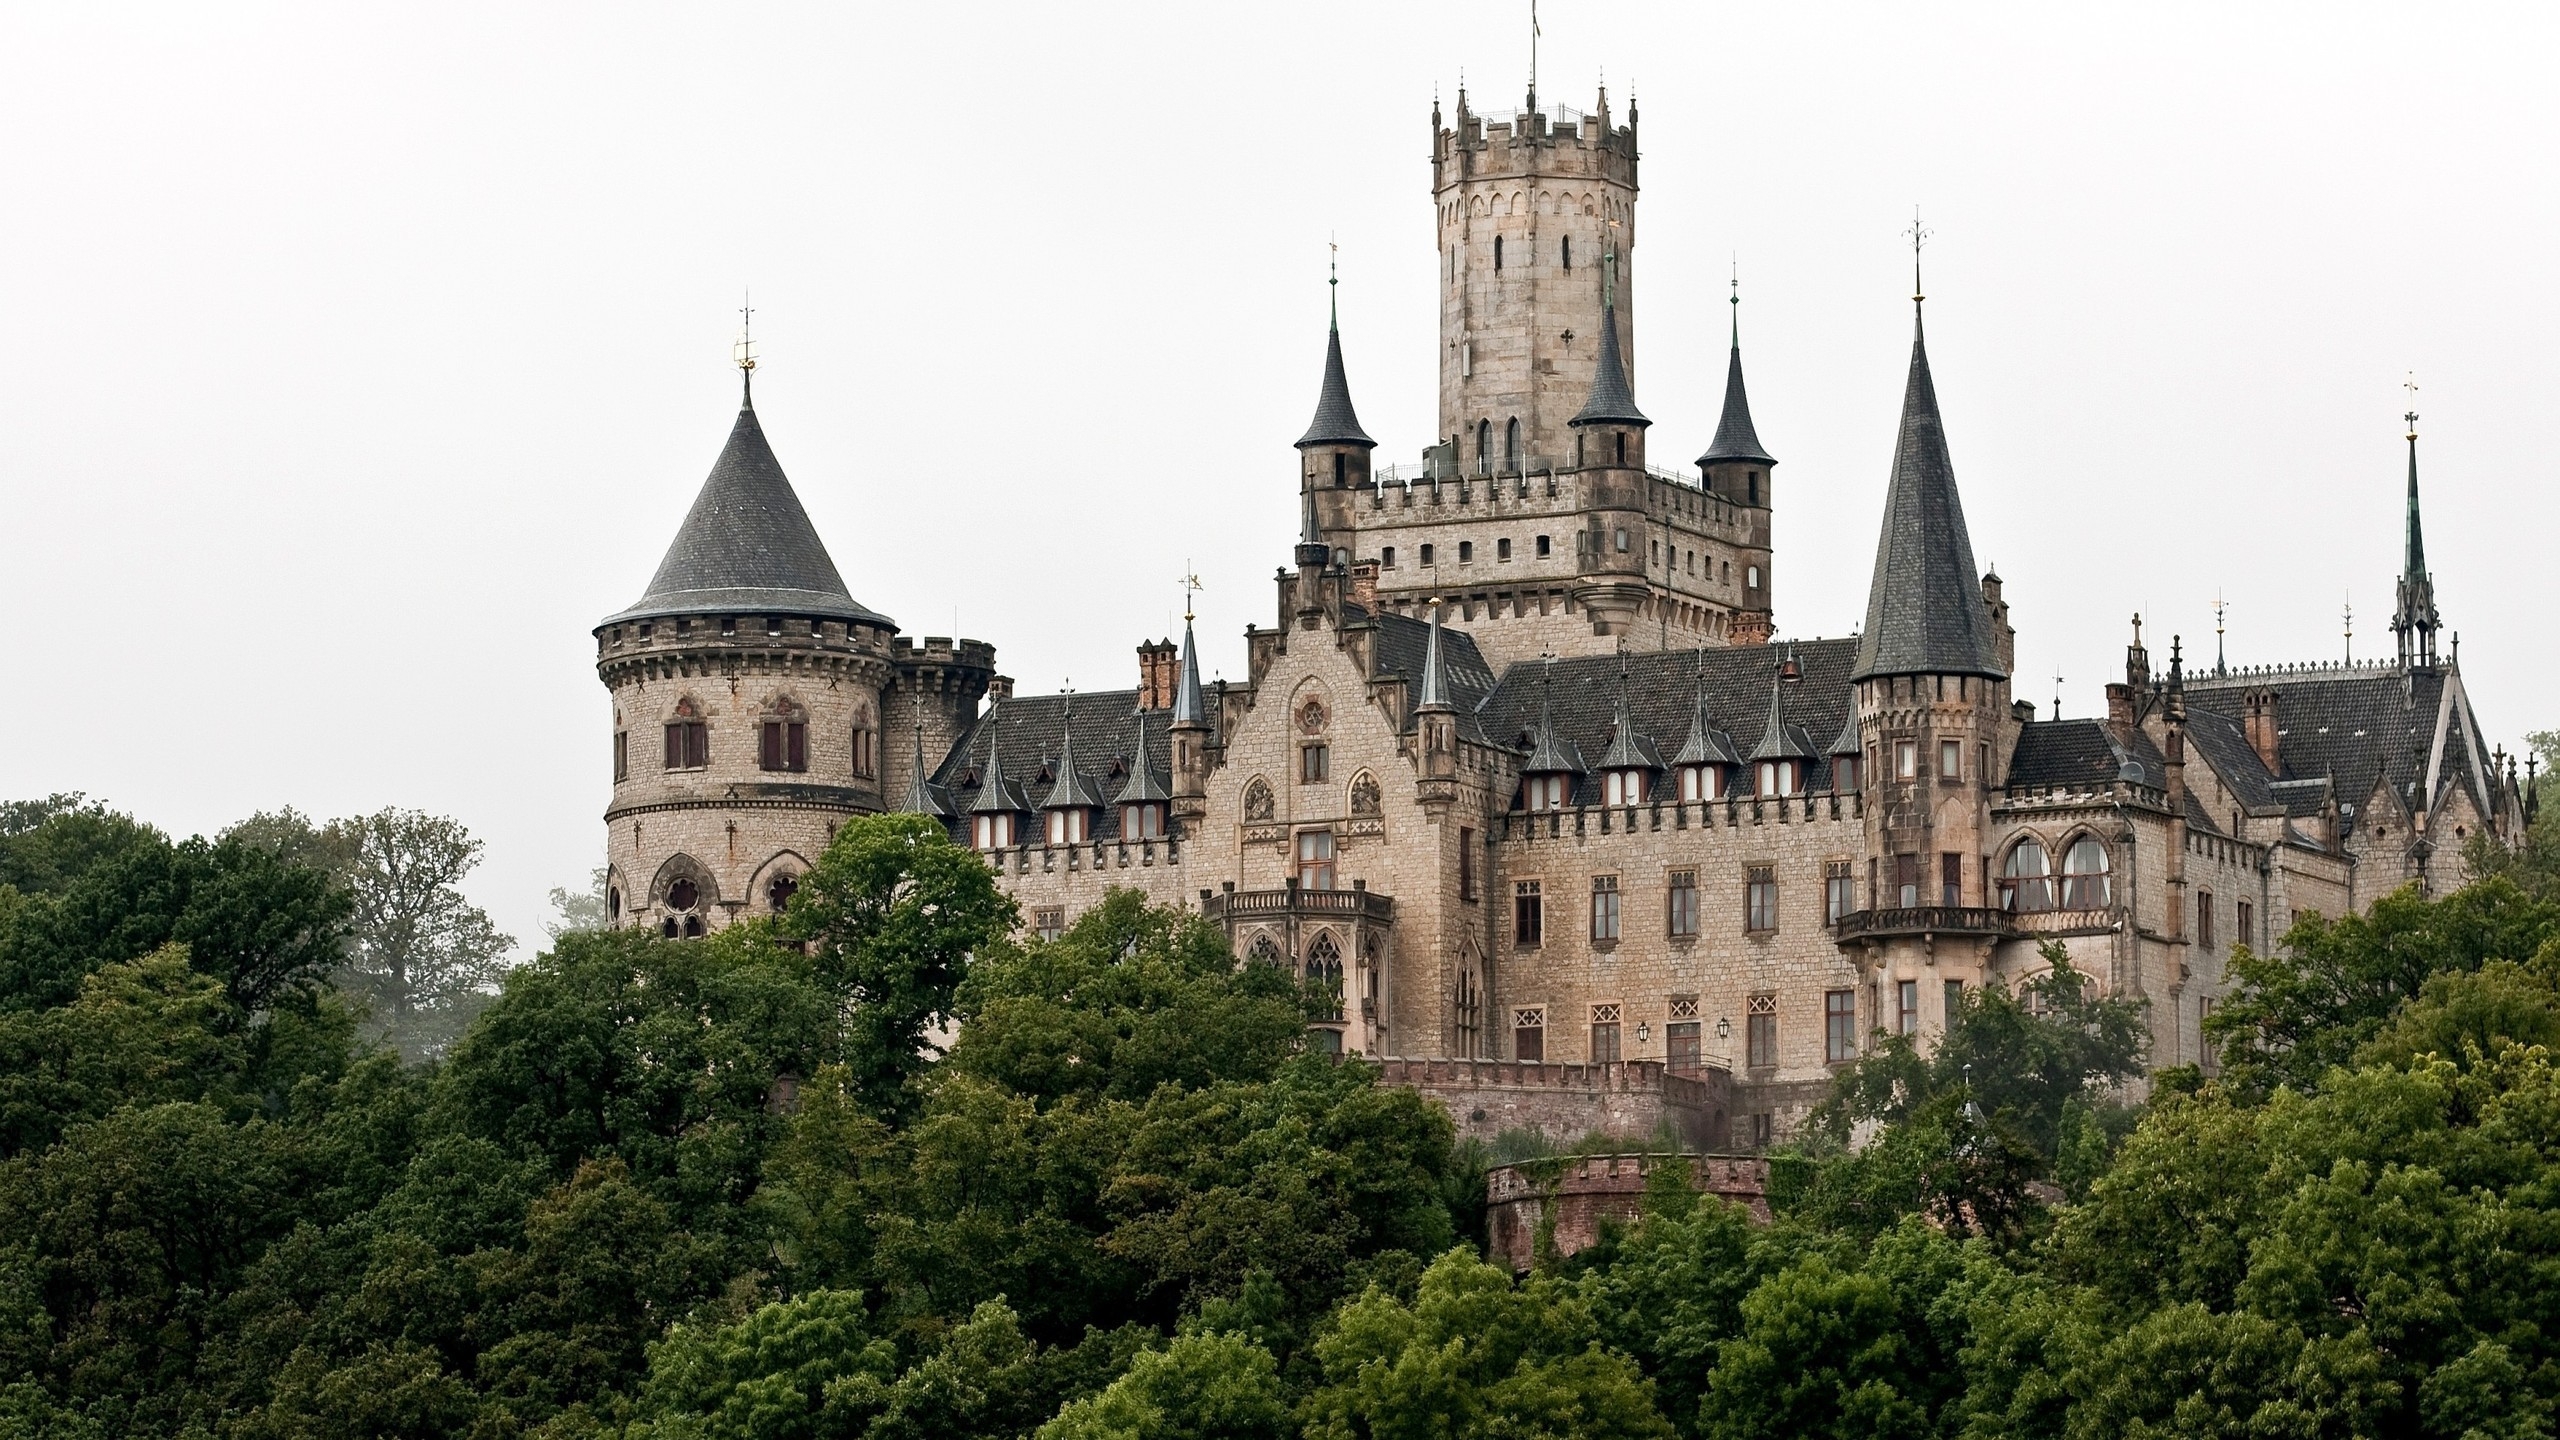 Marienburg Castle Germany for 2560x1440 HDTV resolution